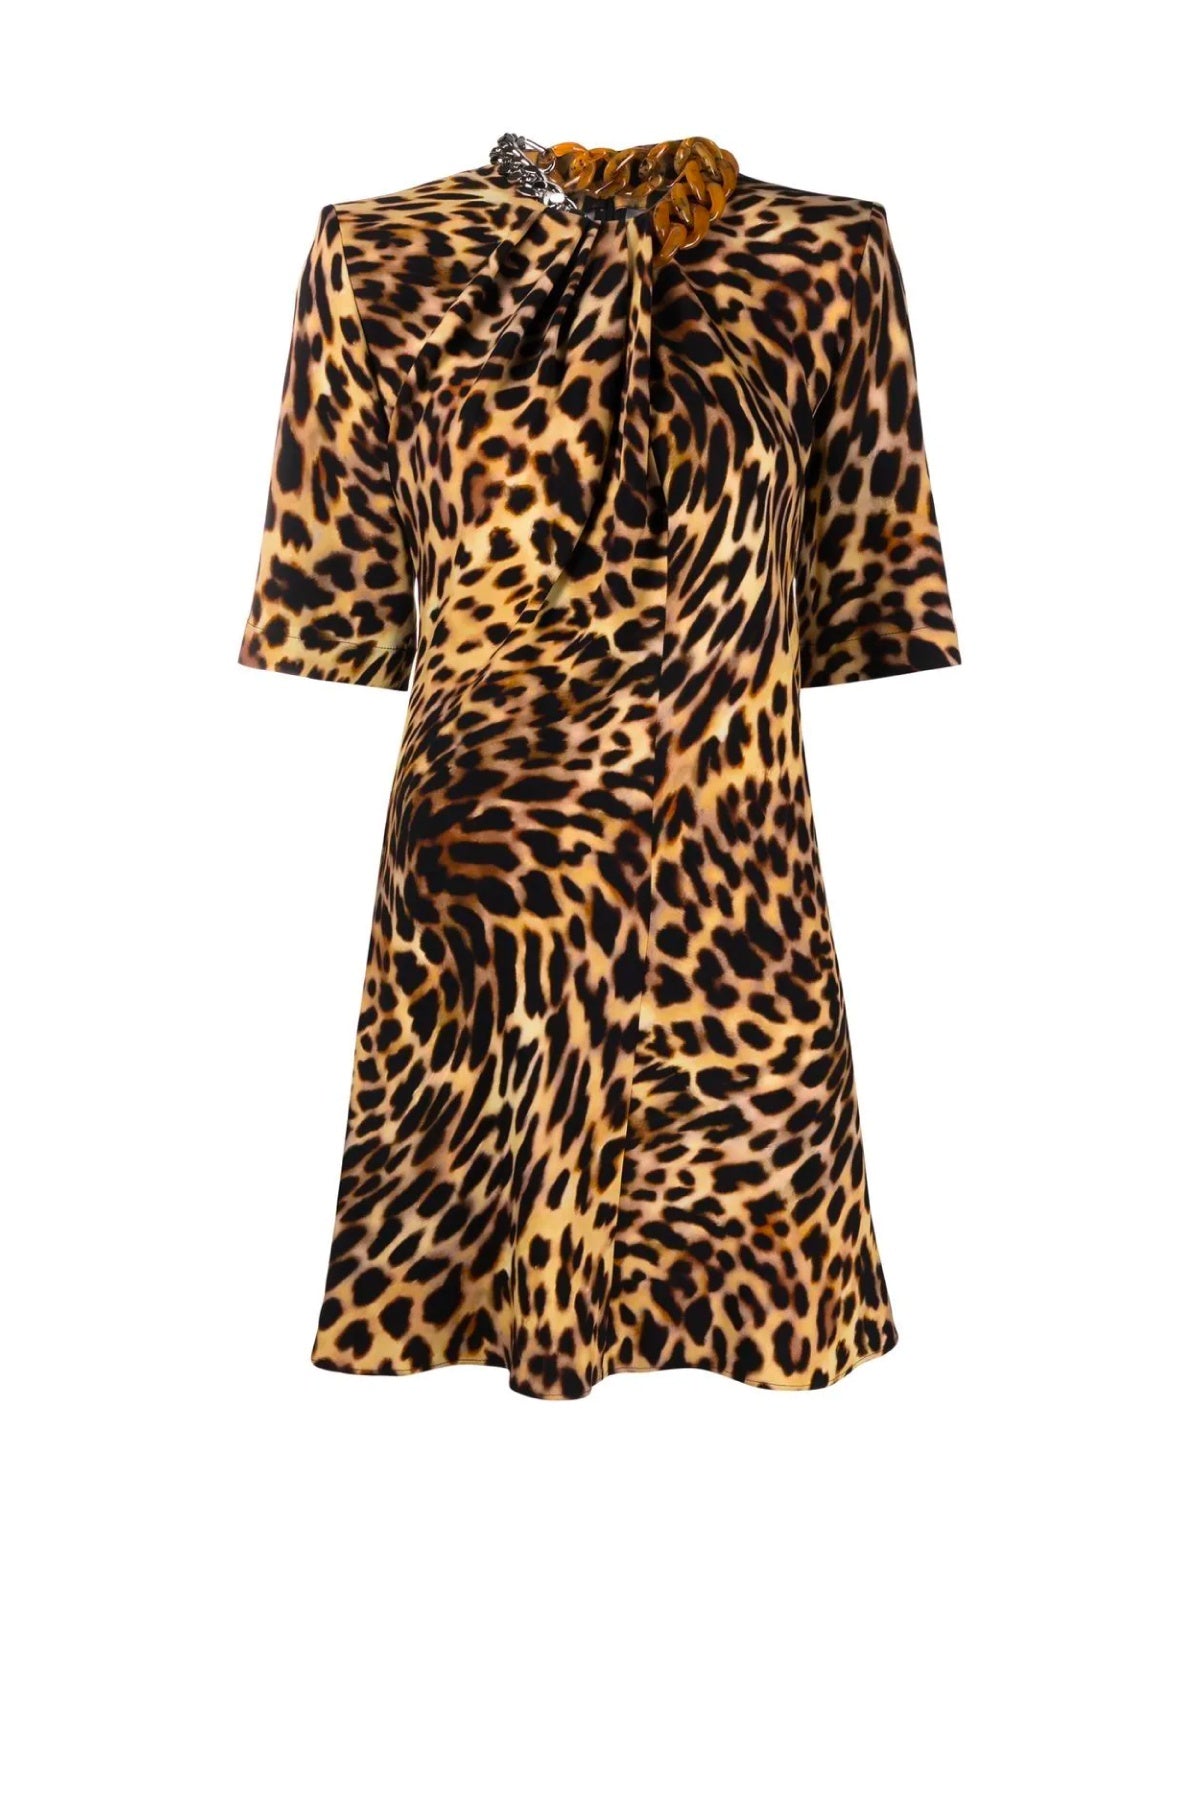 Stella McCartney Cheetah Print Mini Dress - Tortoiseshell